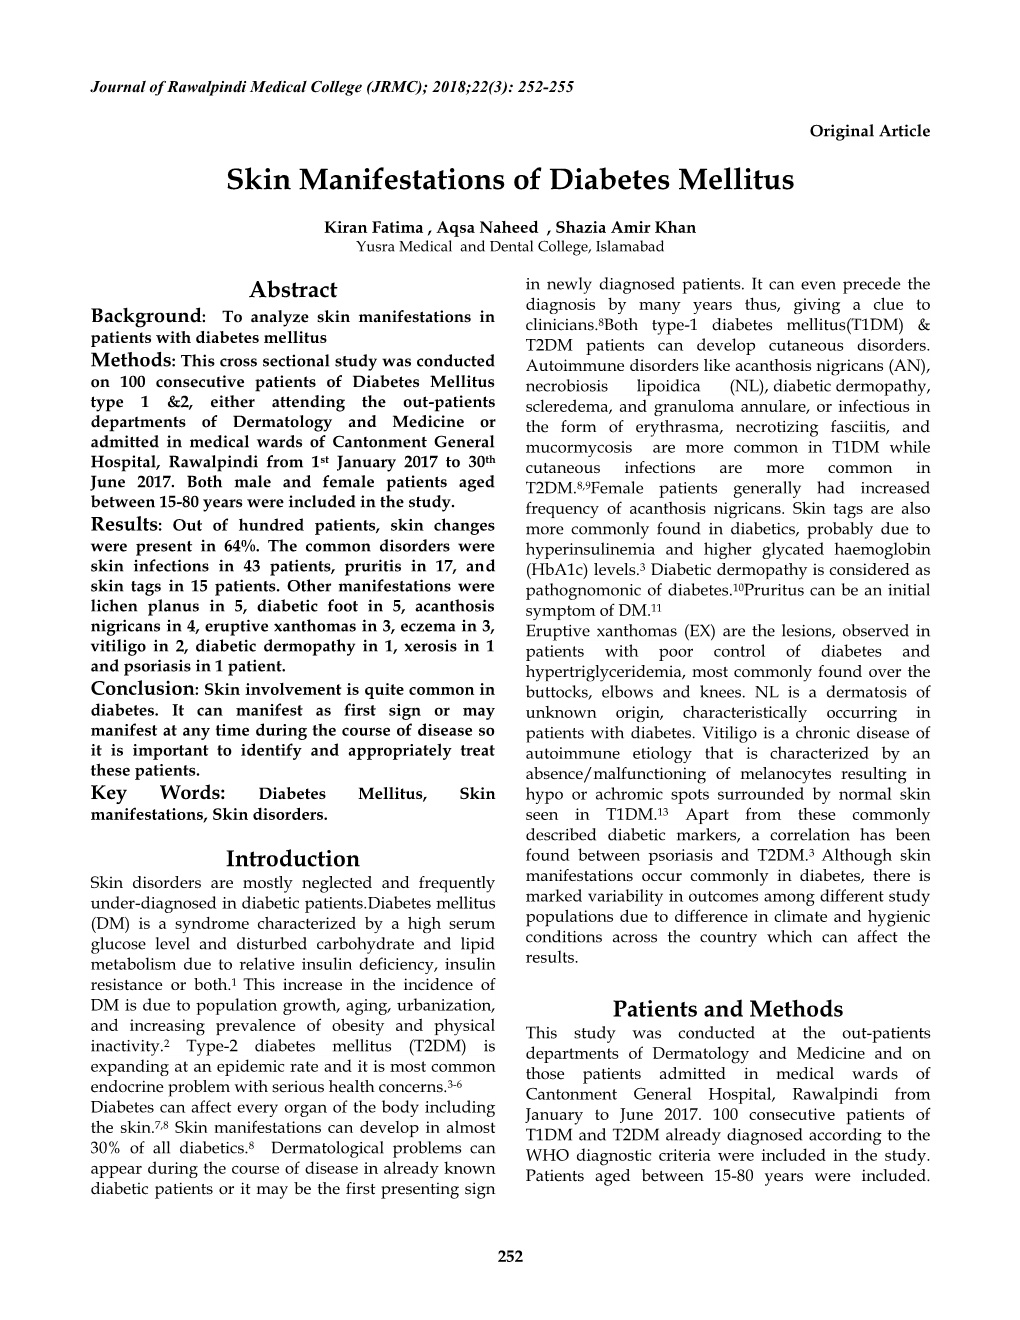 Skin Manifestations of Diabetes Mellitus